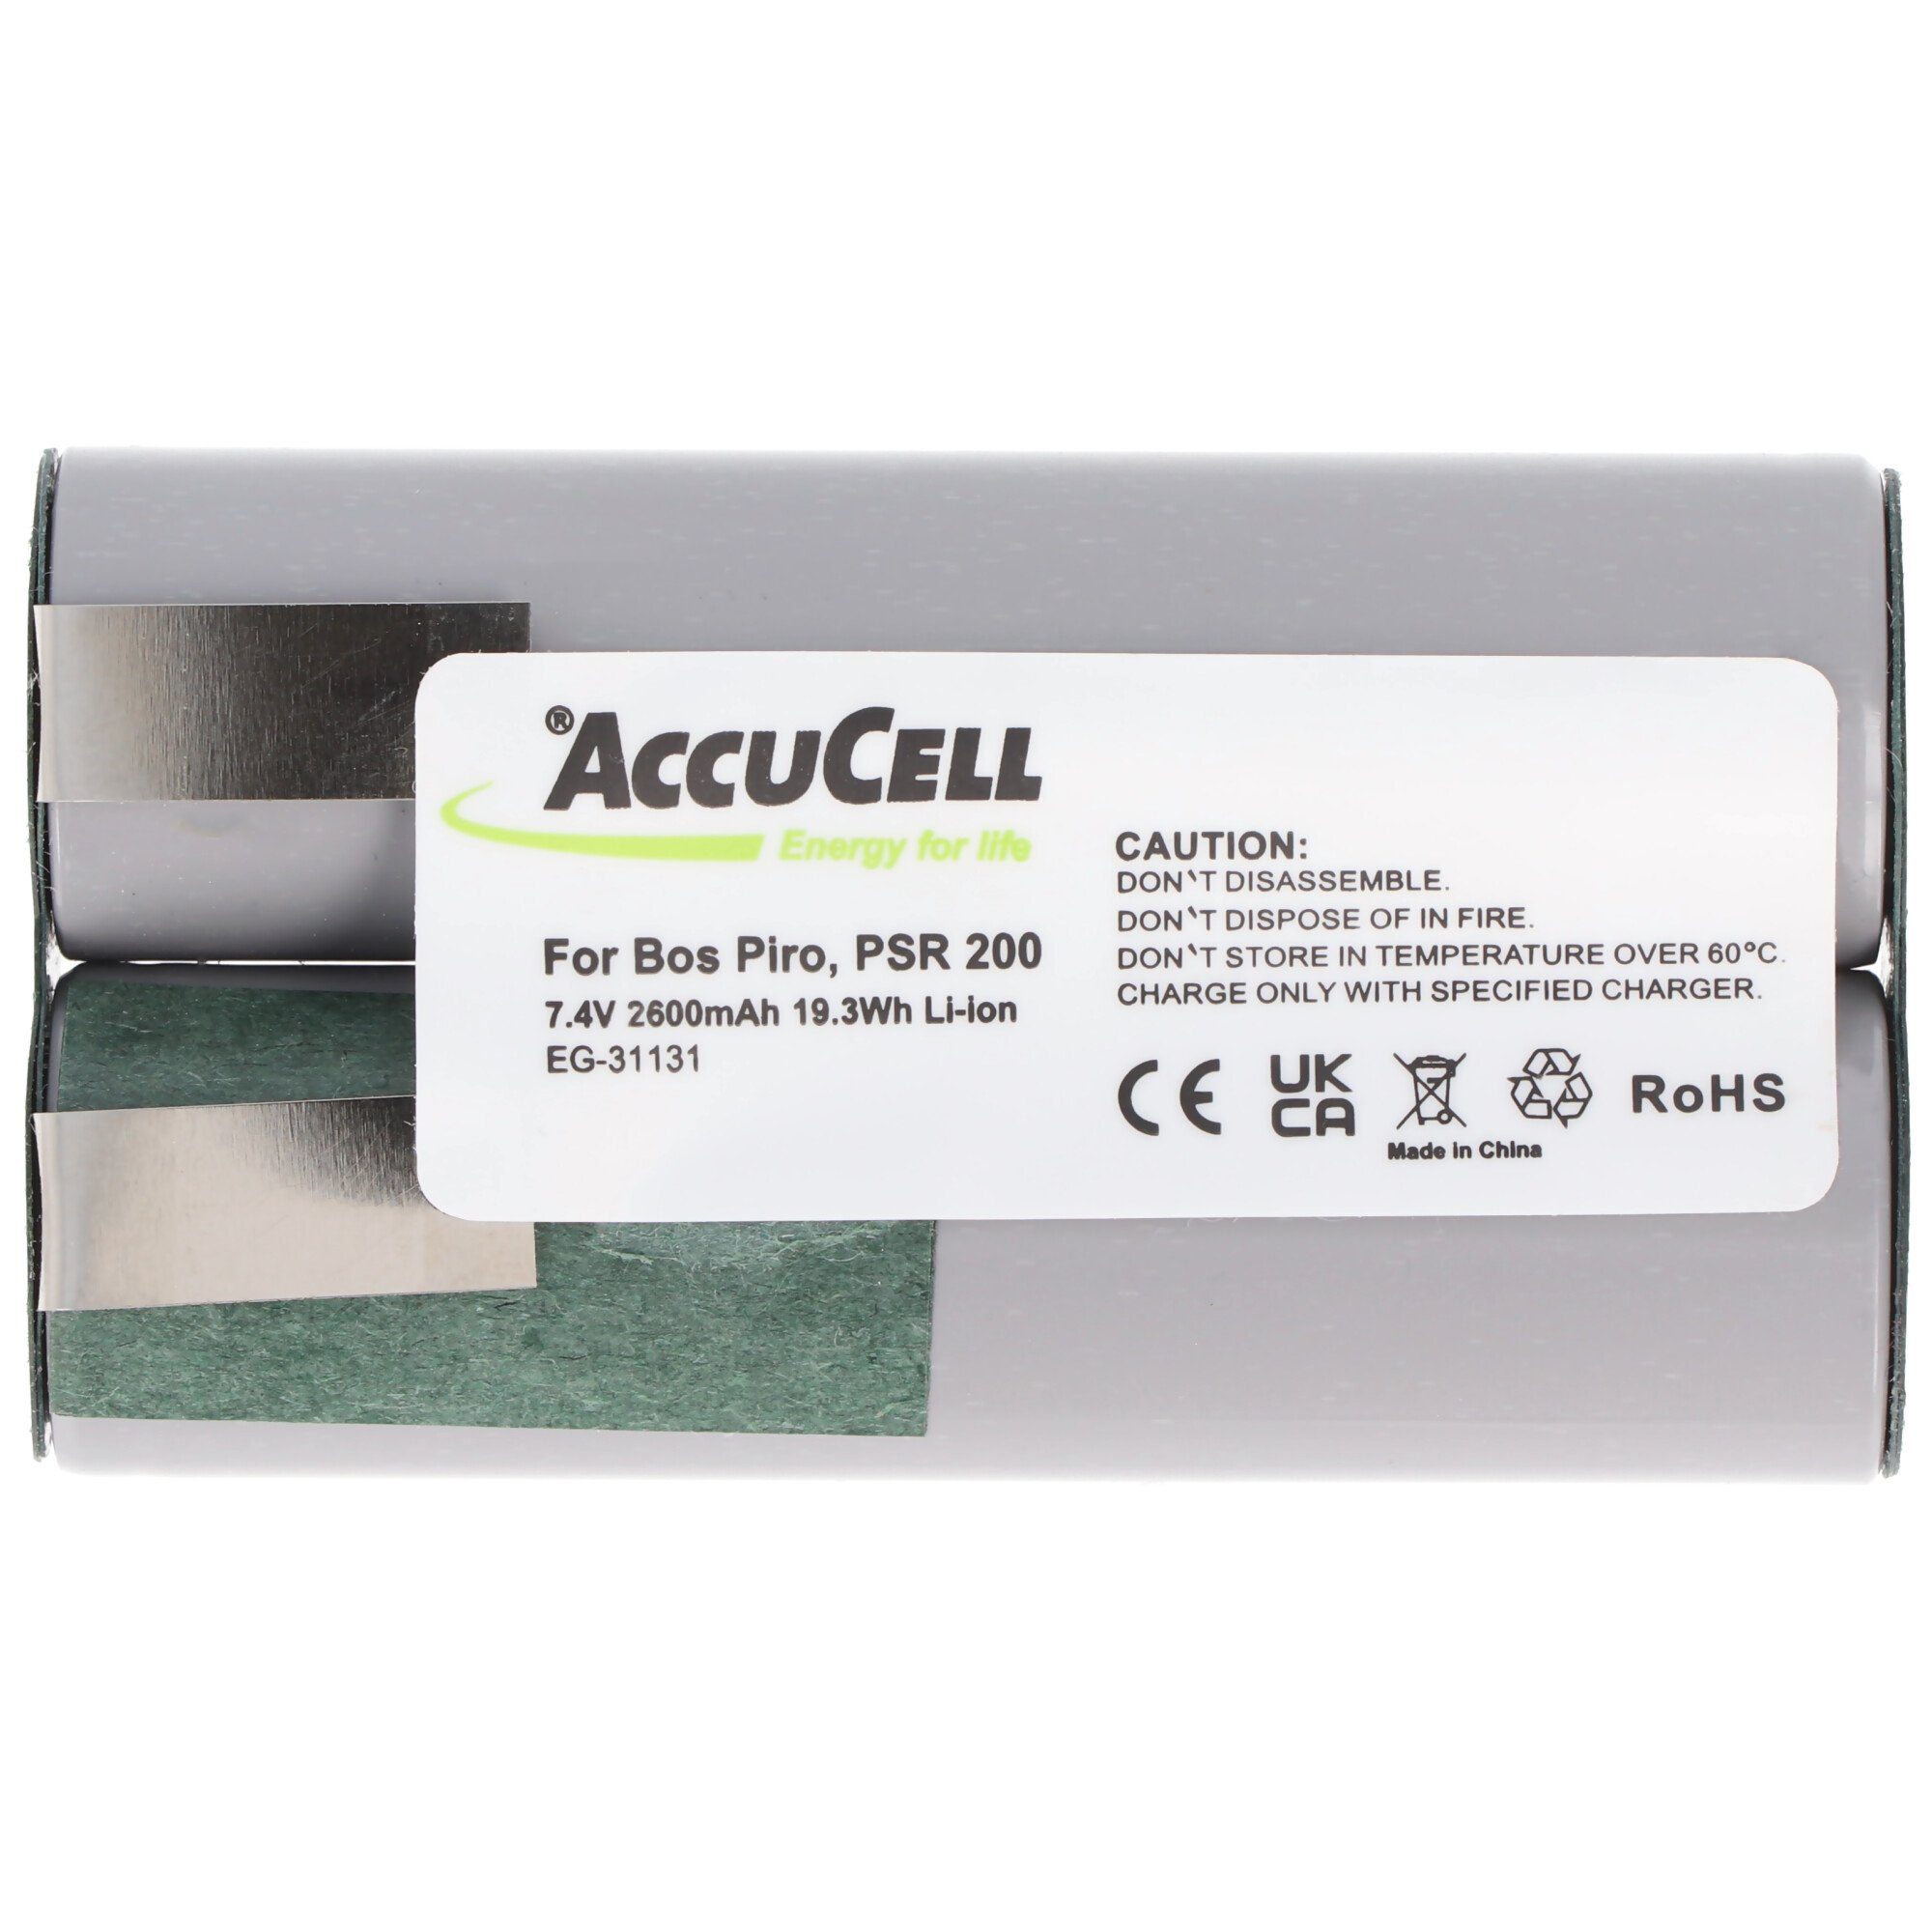 AccuCell Volt 7,2-7,4 Akku Bosch passend 2600 2600mAh Li-ion 200 Akku Piro (7,4 V) mAh PSR für Akku